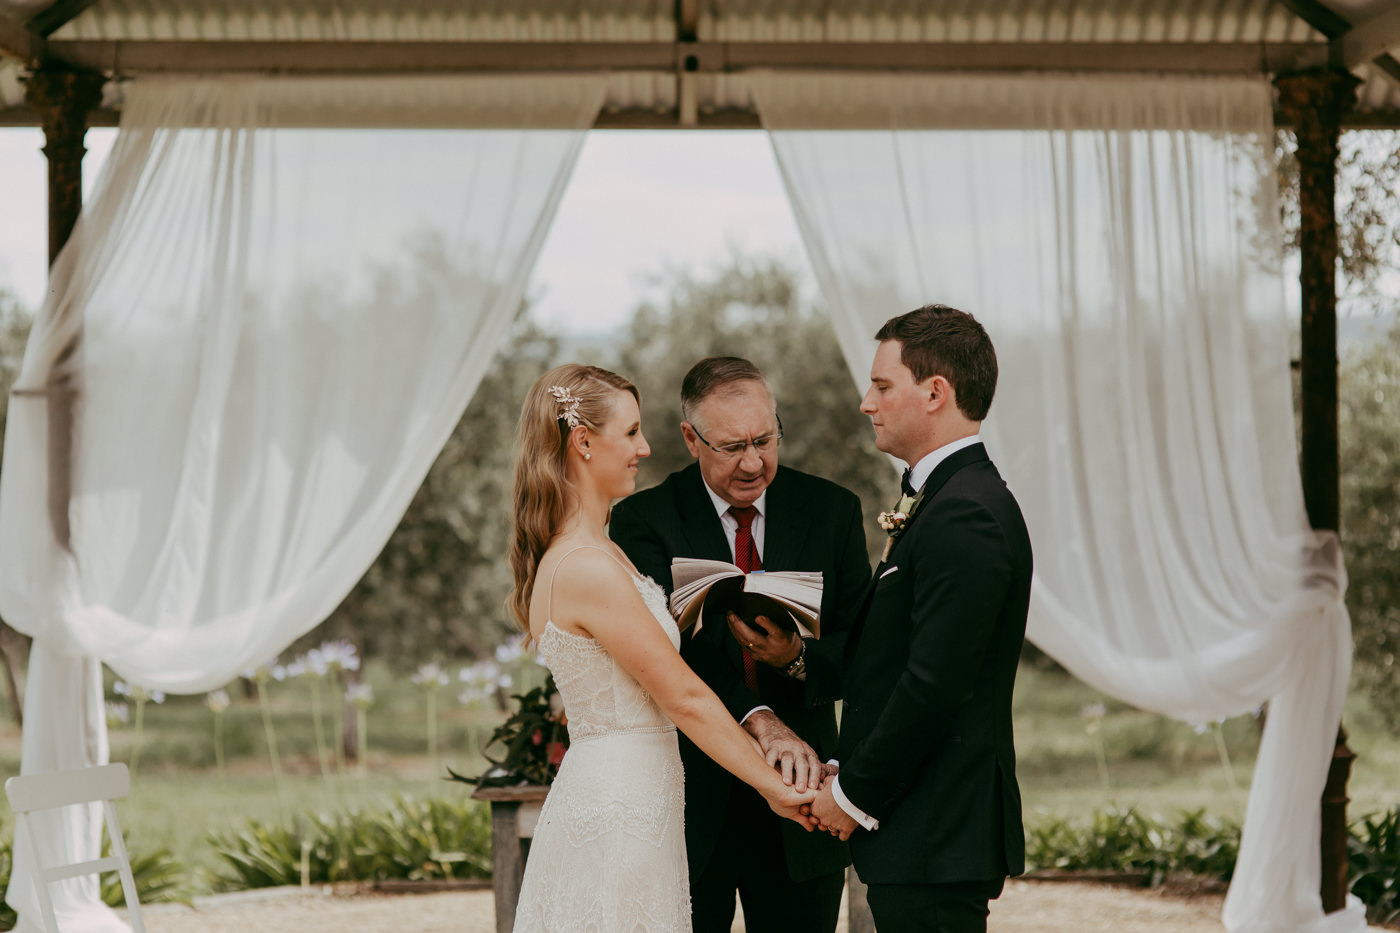 Anthony & Eliet - Wagga Wagga Wedding - Country NSW - Samantha Heather Photography-107.jpg